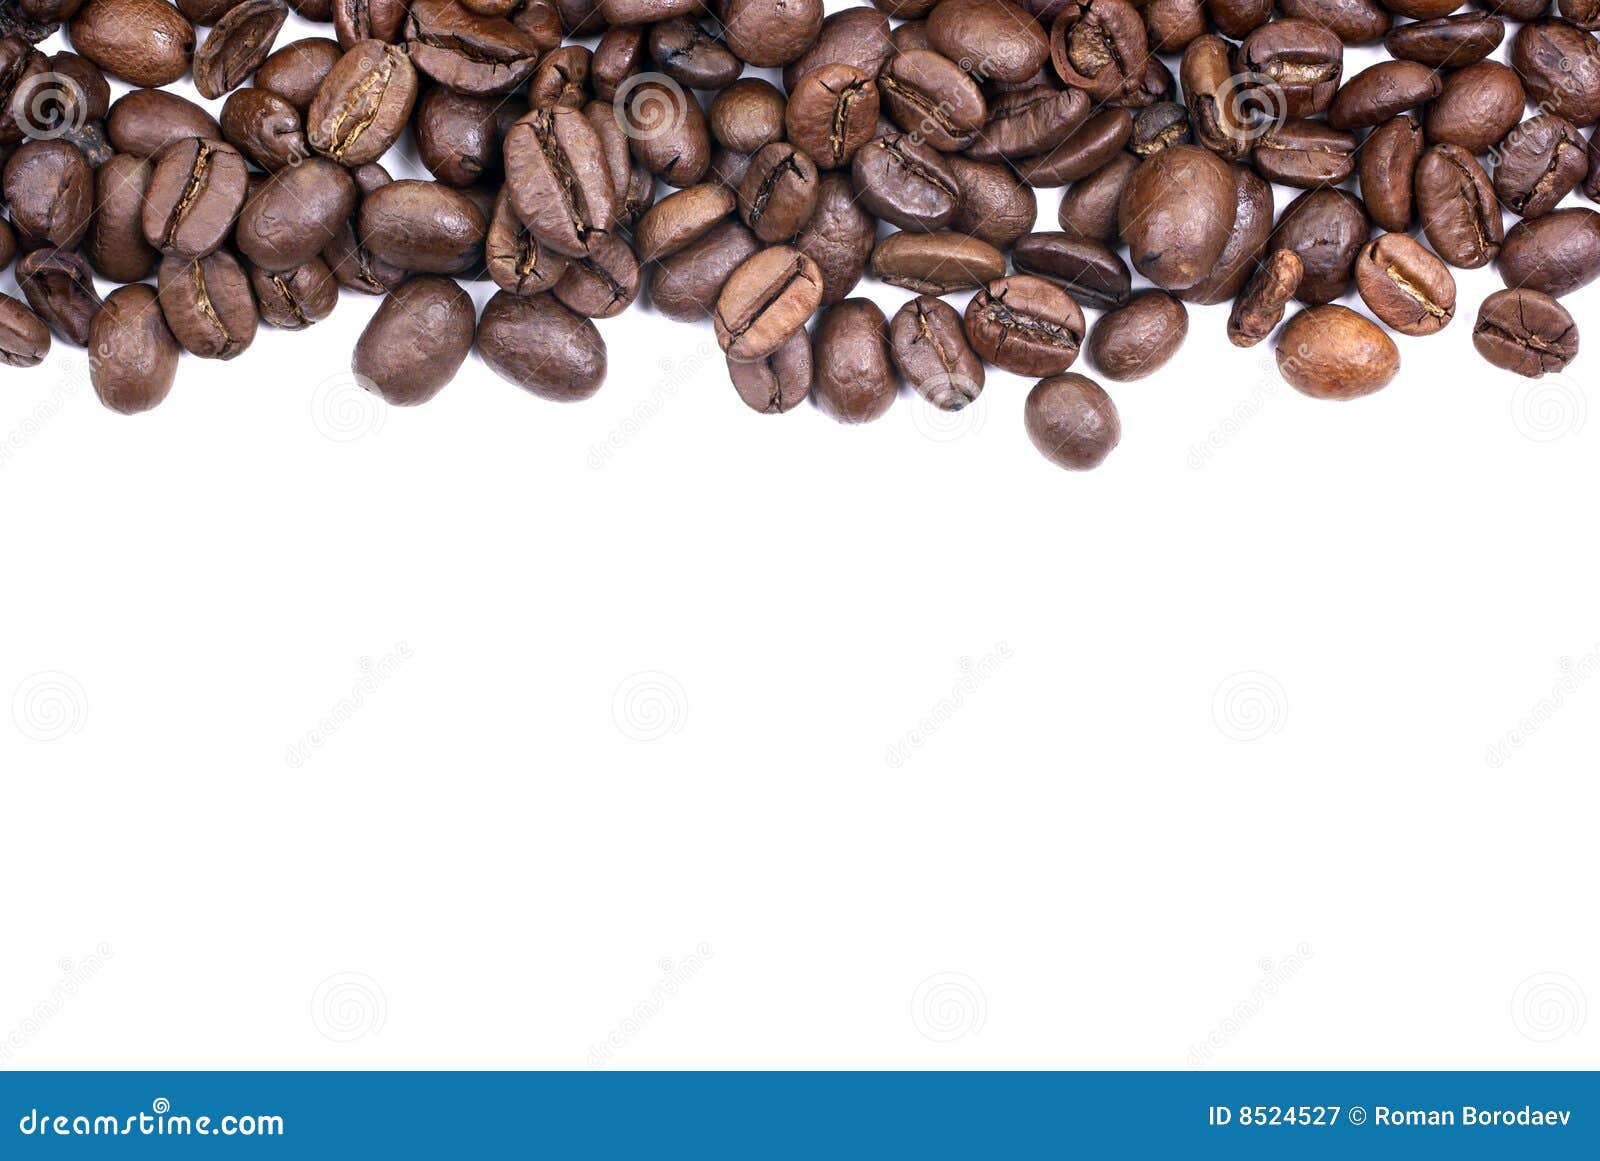 coffee beans on white background  brown caffeine roasted espresso close up bean dark closeup pattern roast mocha grain top